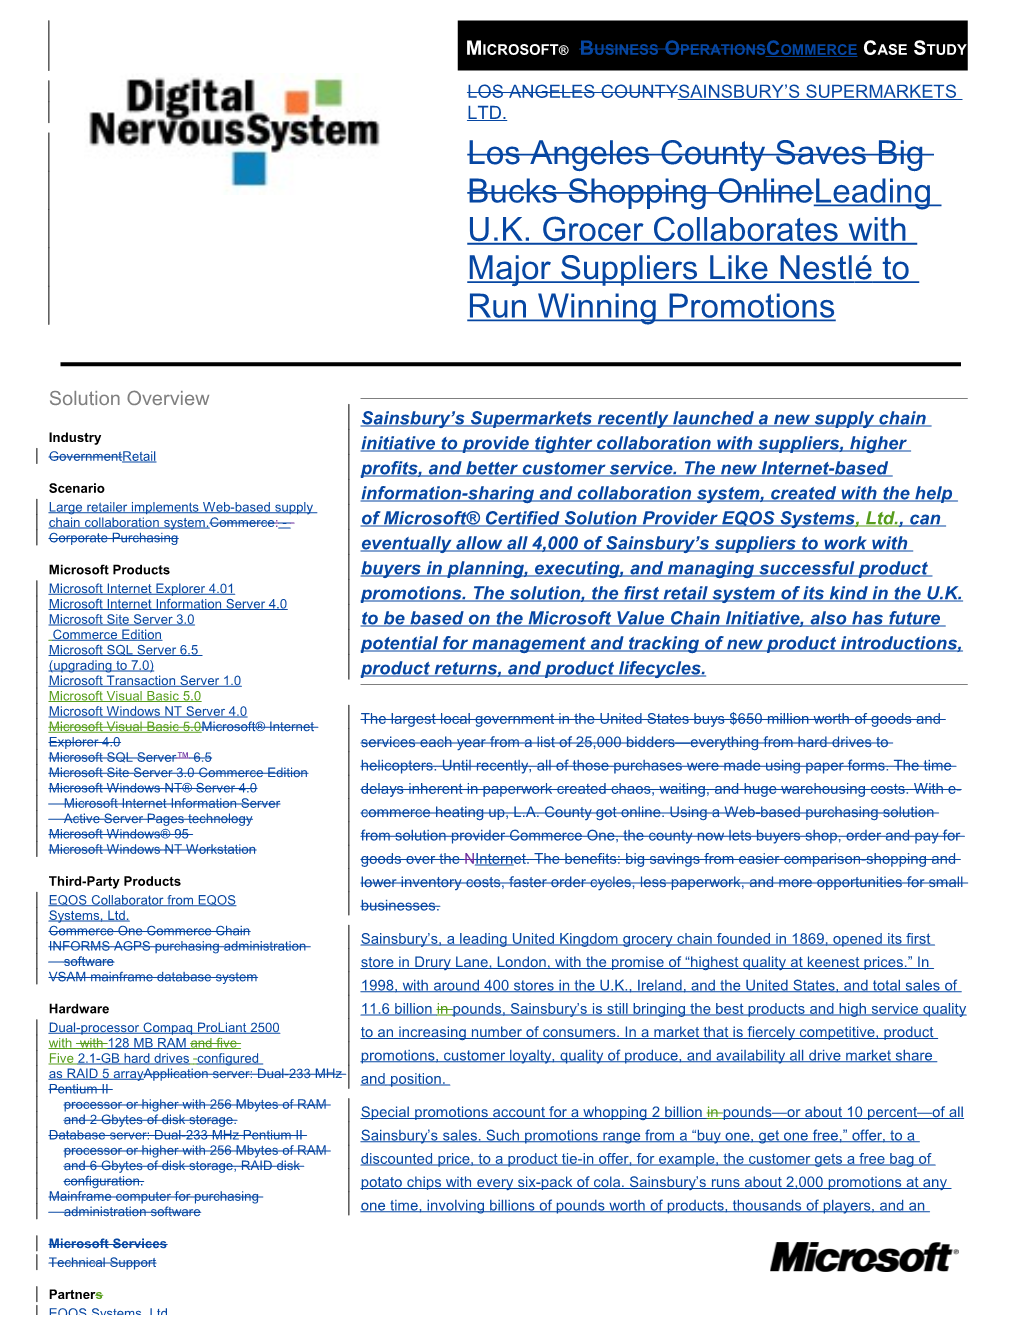 Microsoft Commerce Case Study Microsoft Business Operations Case Study